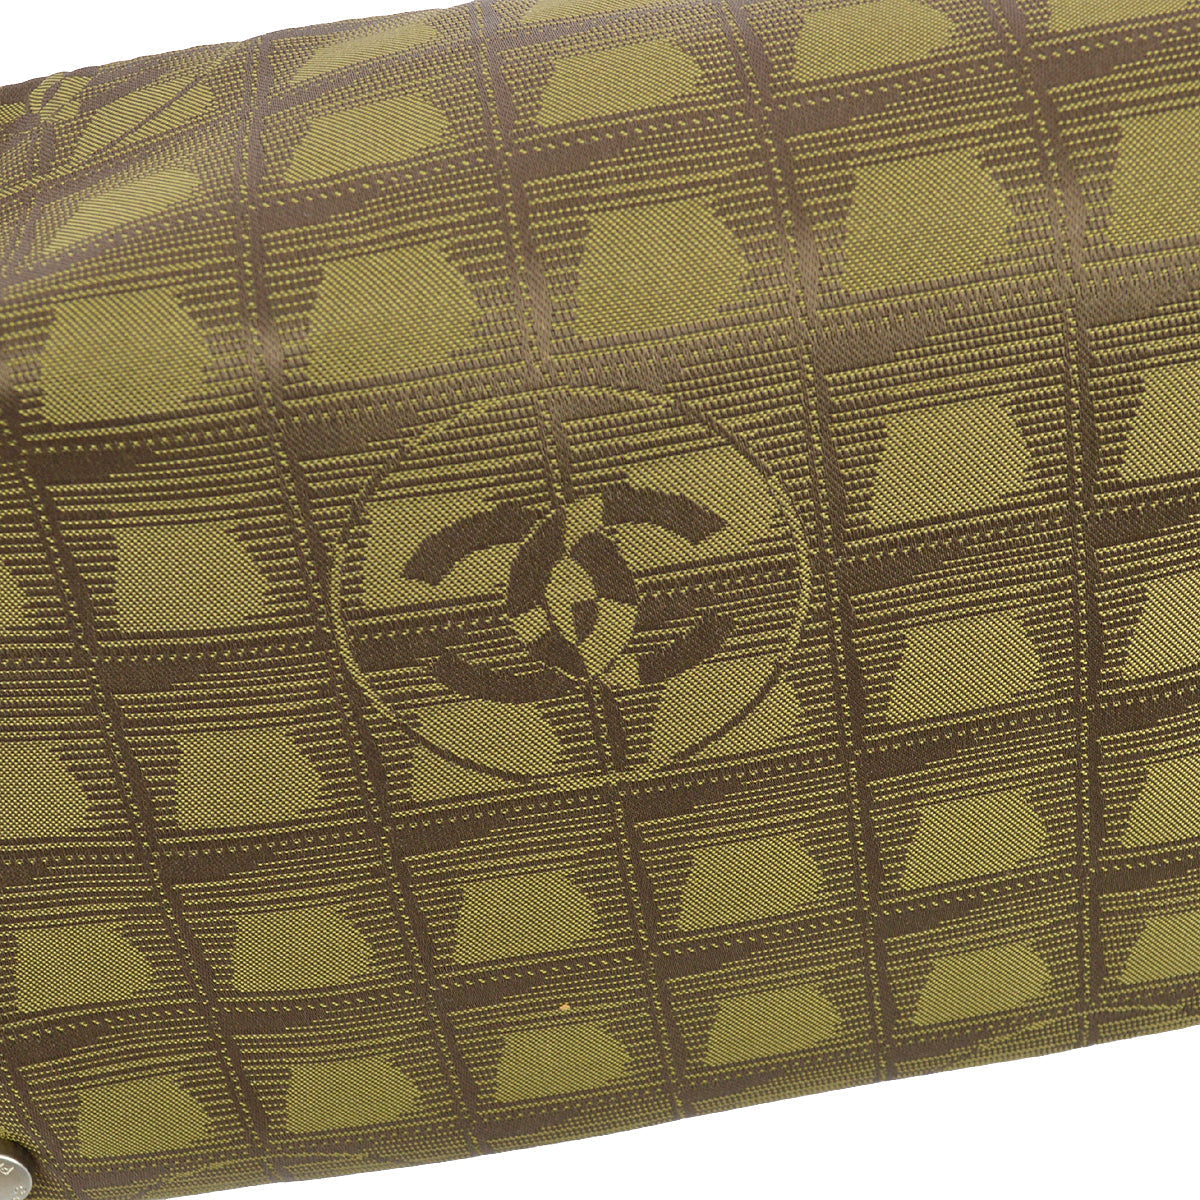 Chanel 2001-2003 綠色棕色提花尼龍 New Travel Line 手袋